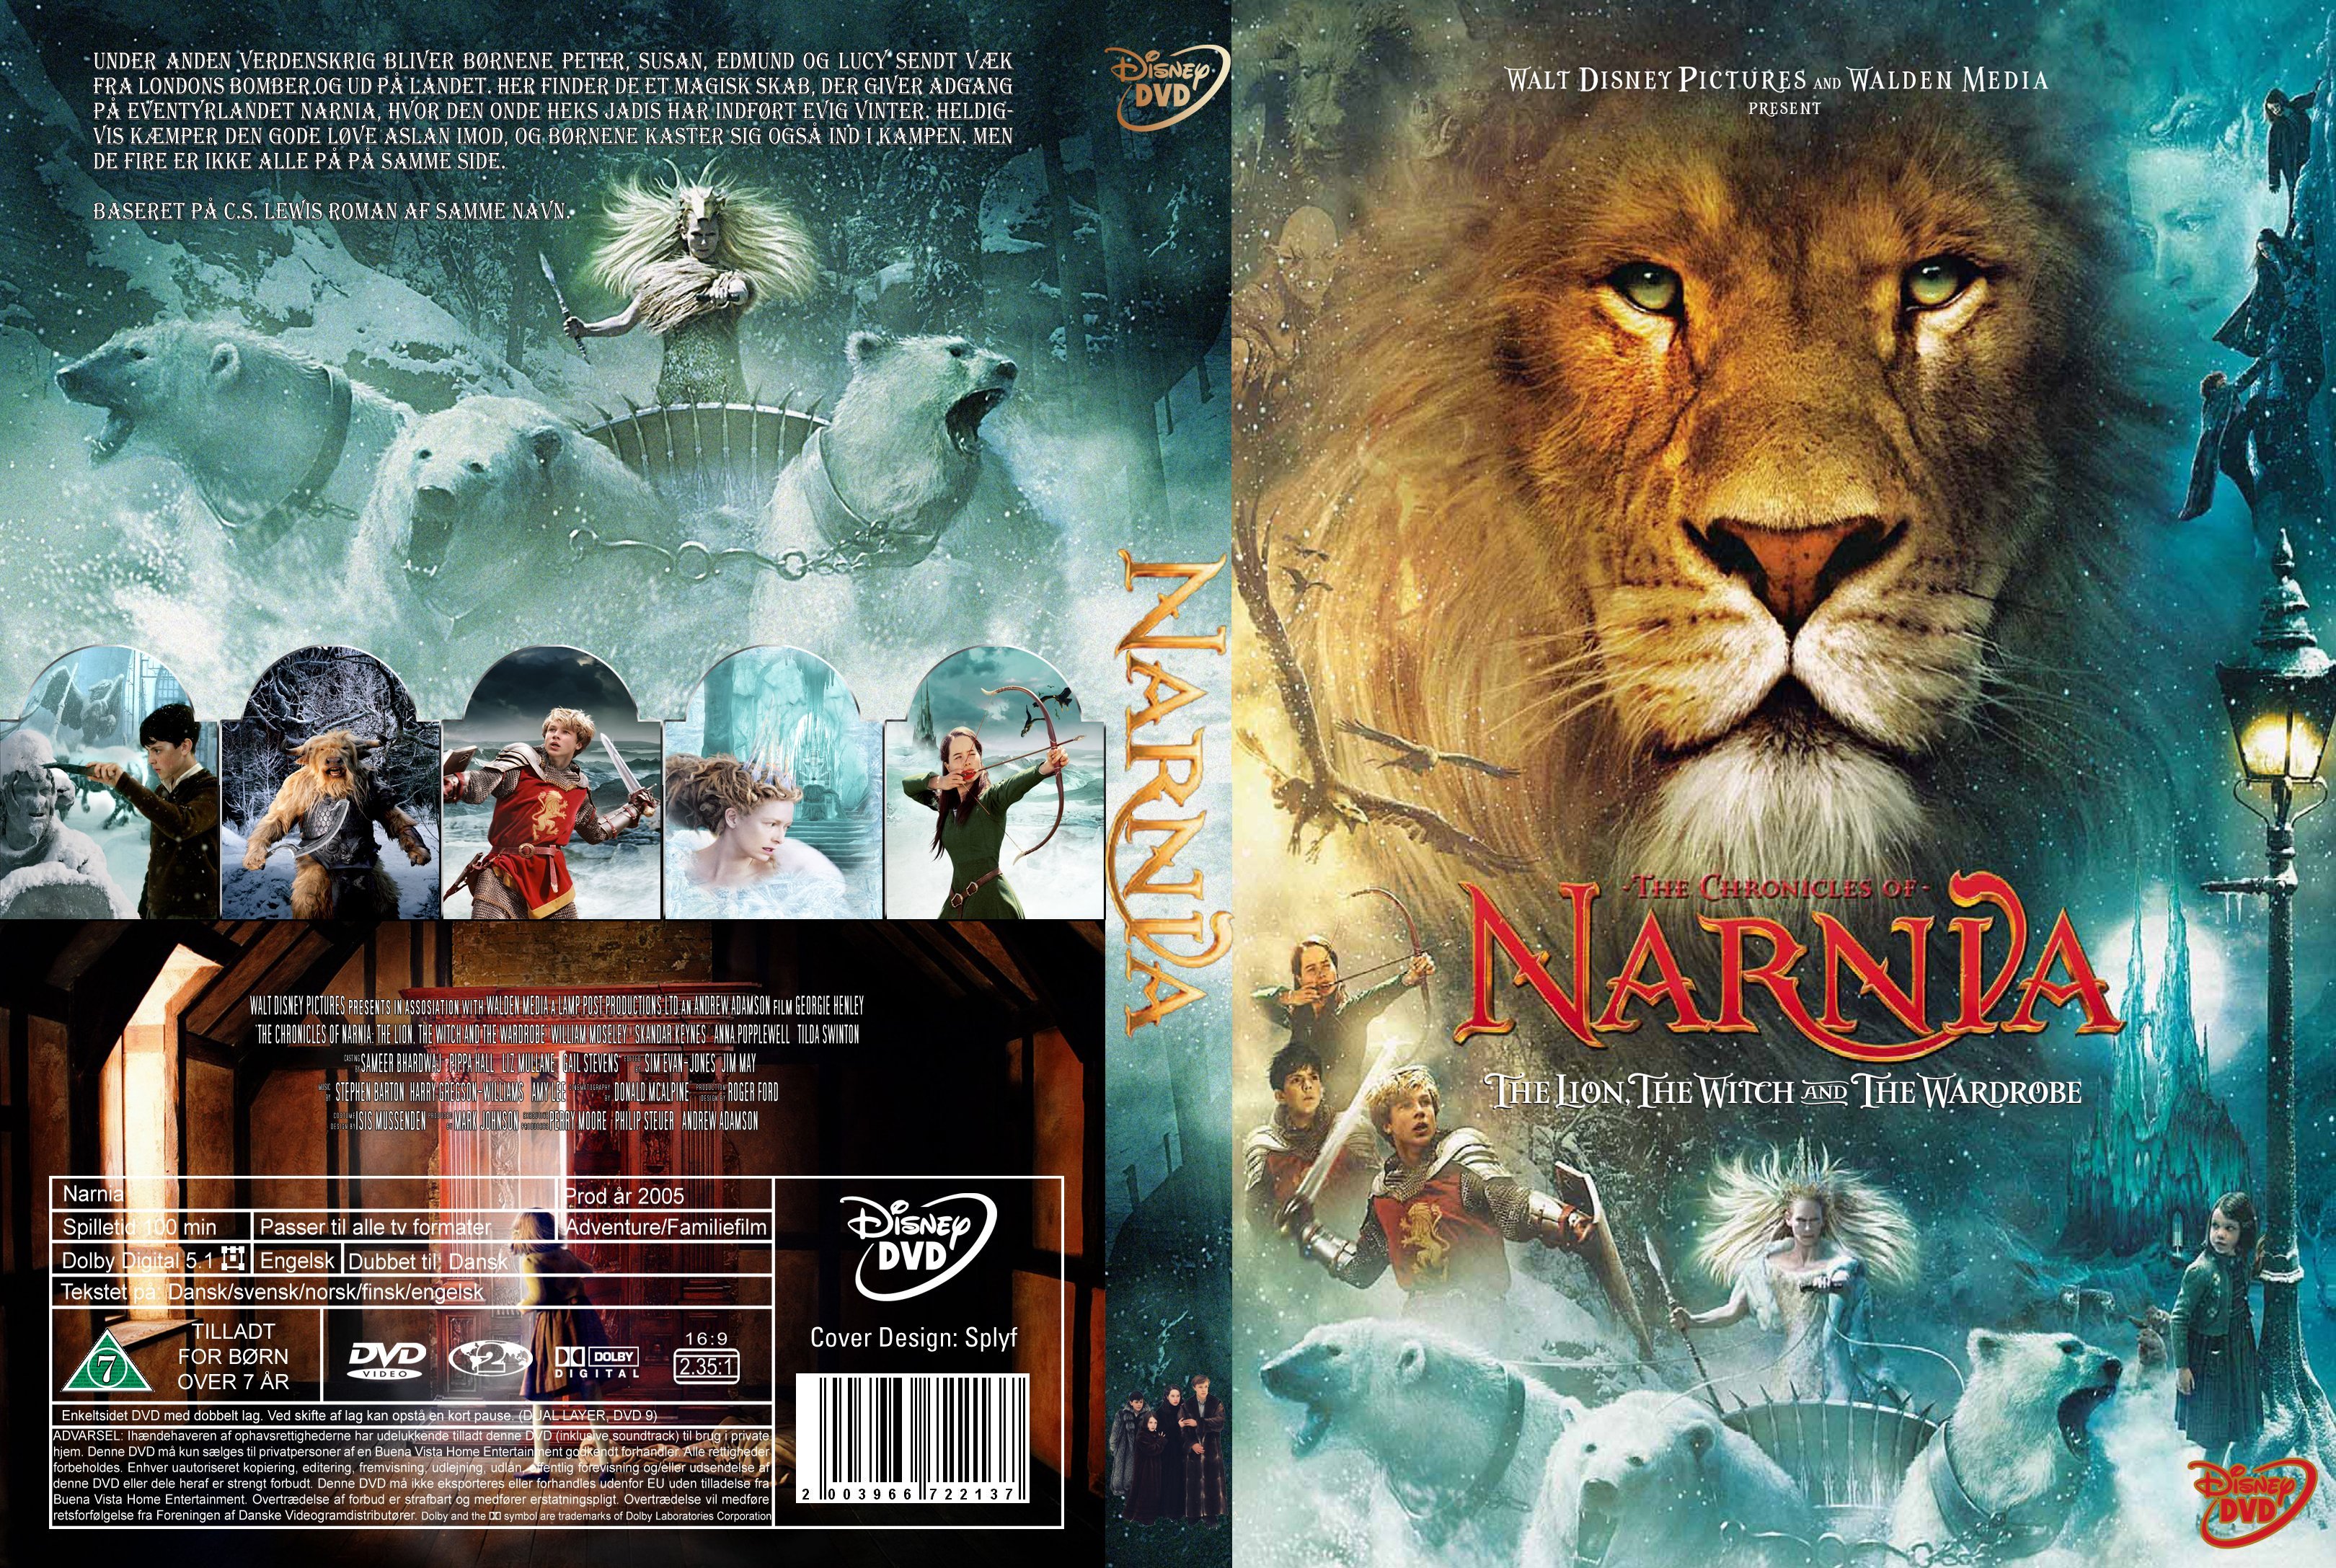 narnia, Adventure, Fantasy, Family, Series, Book, 1narnia, Chronicles, Disney, Poster, Lion Wallpaper